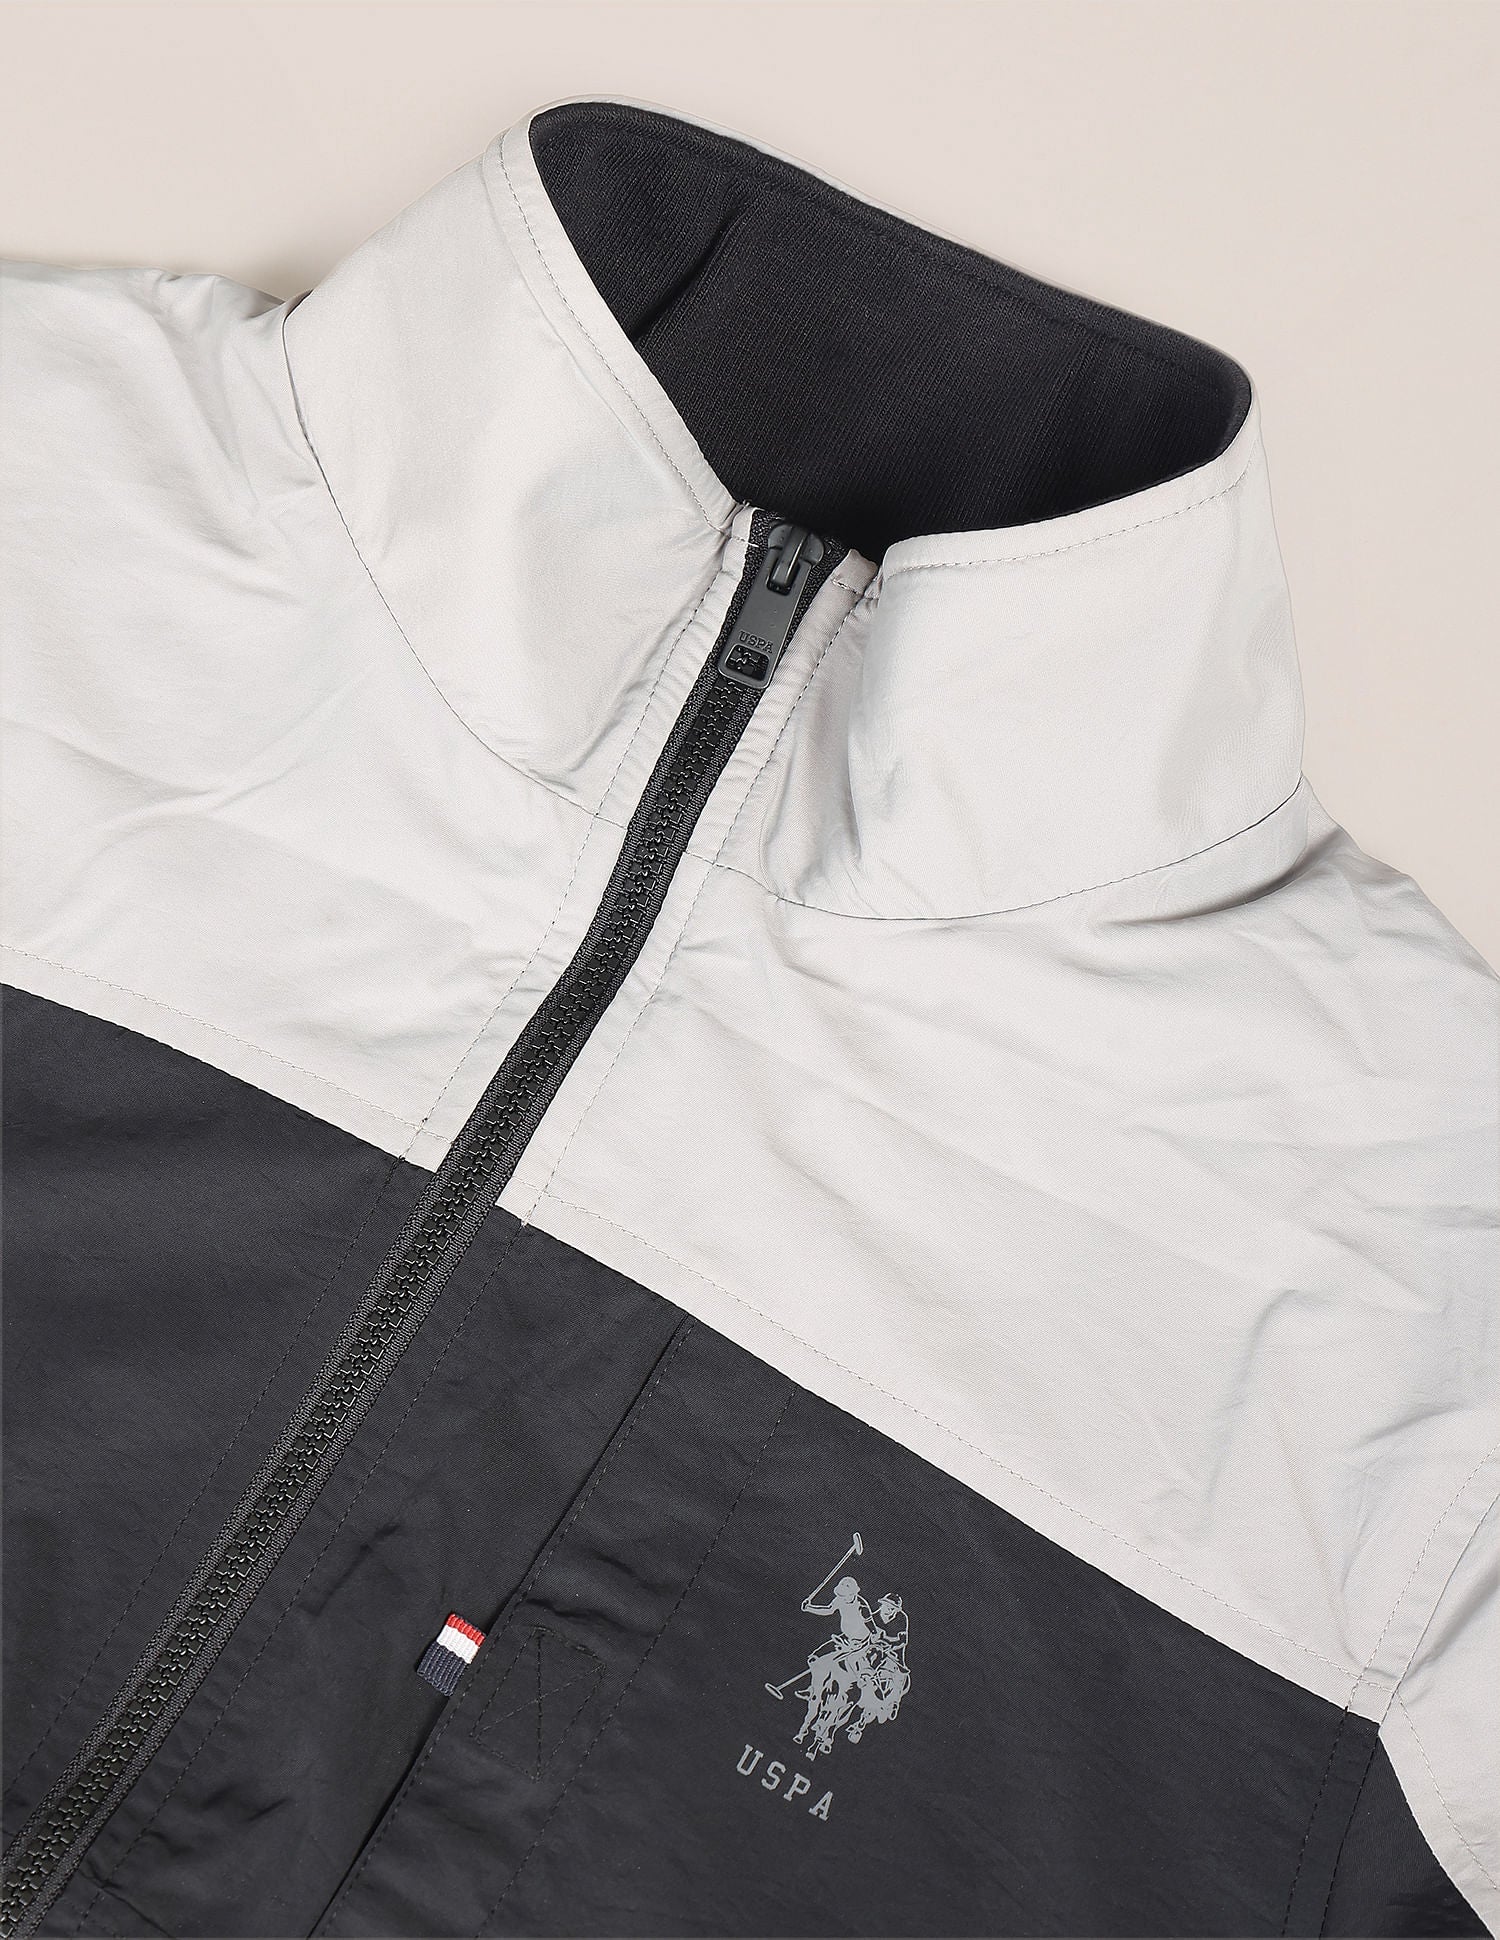 US Polo Assassination Zip Up Jacket Size XL Black And White 100% Poly!! |  eBay